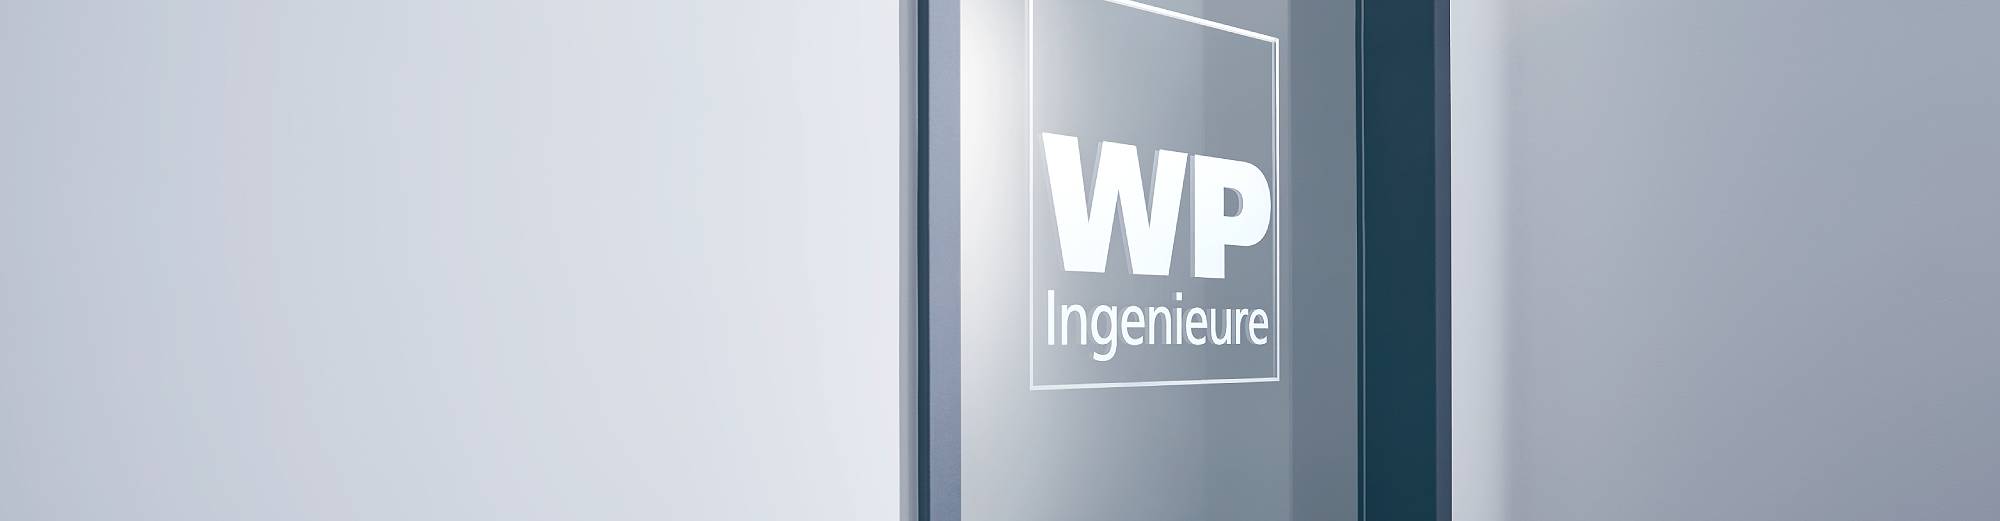 WP Ingenieure - Türschild